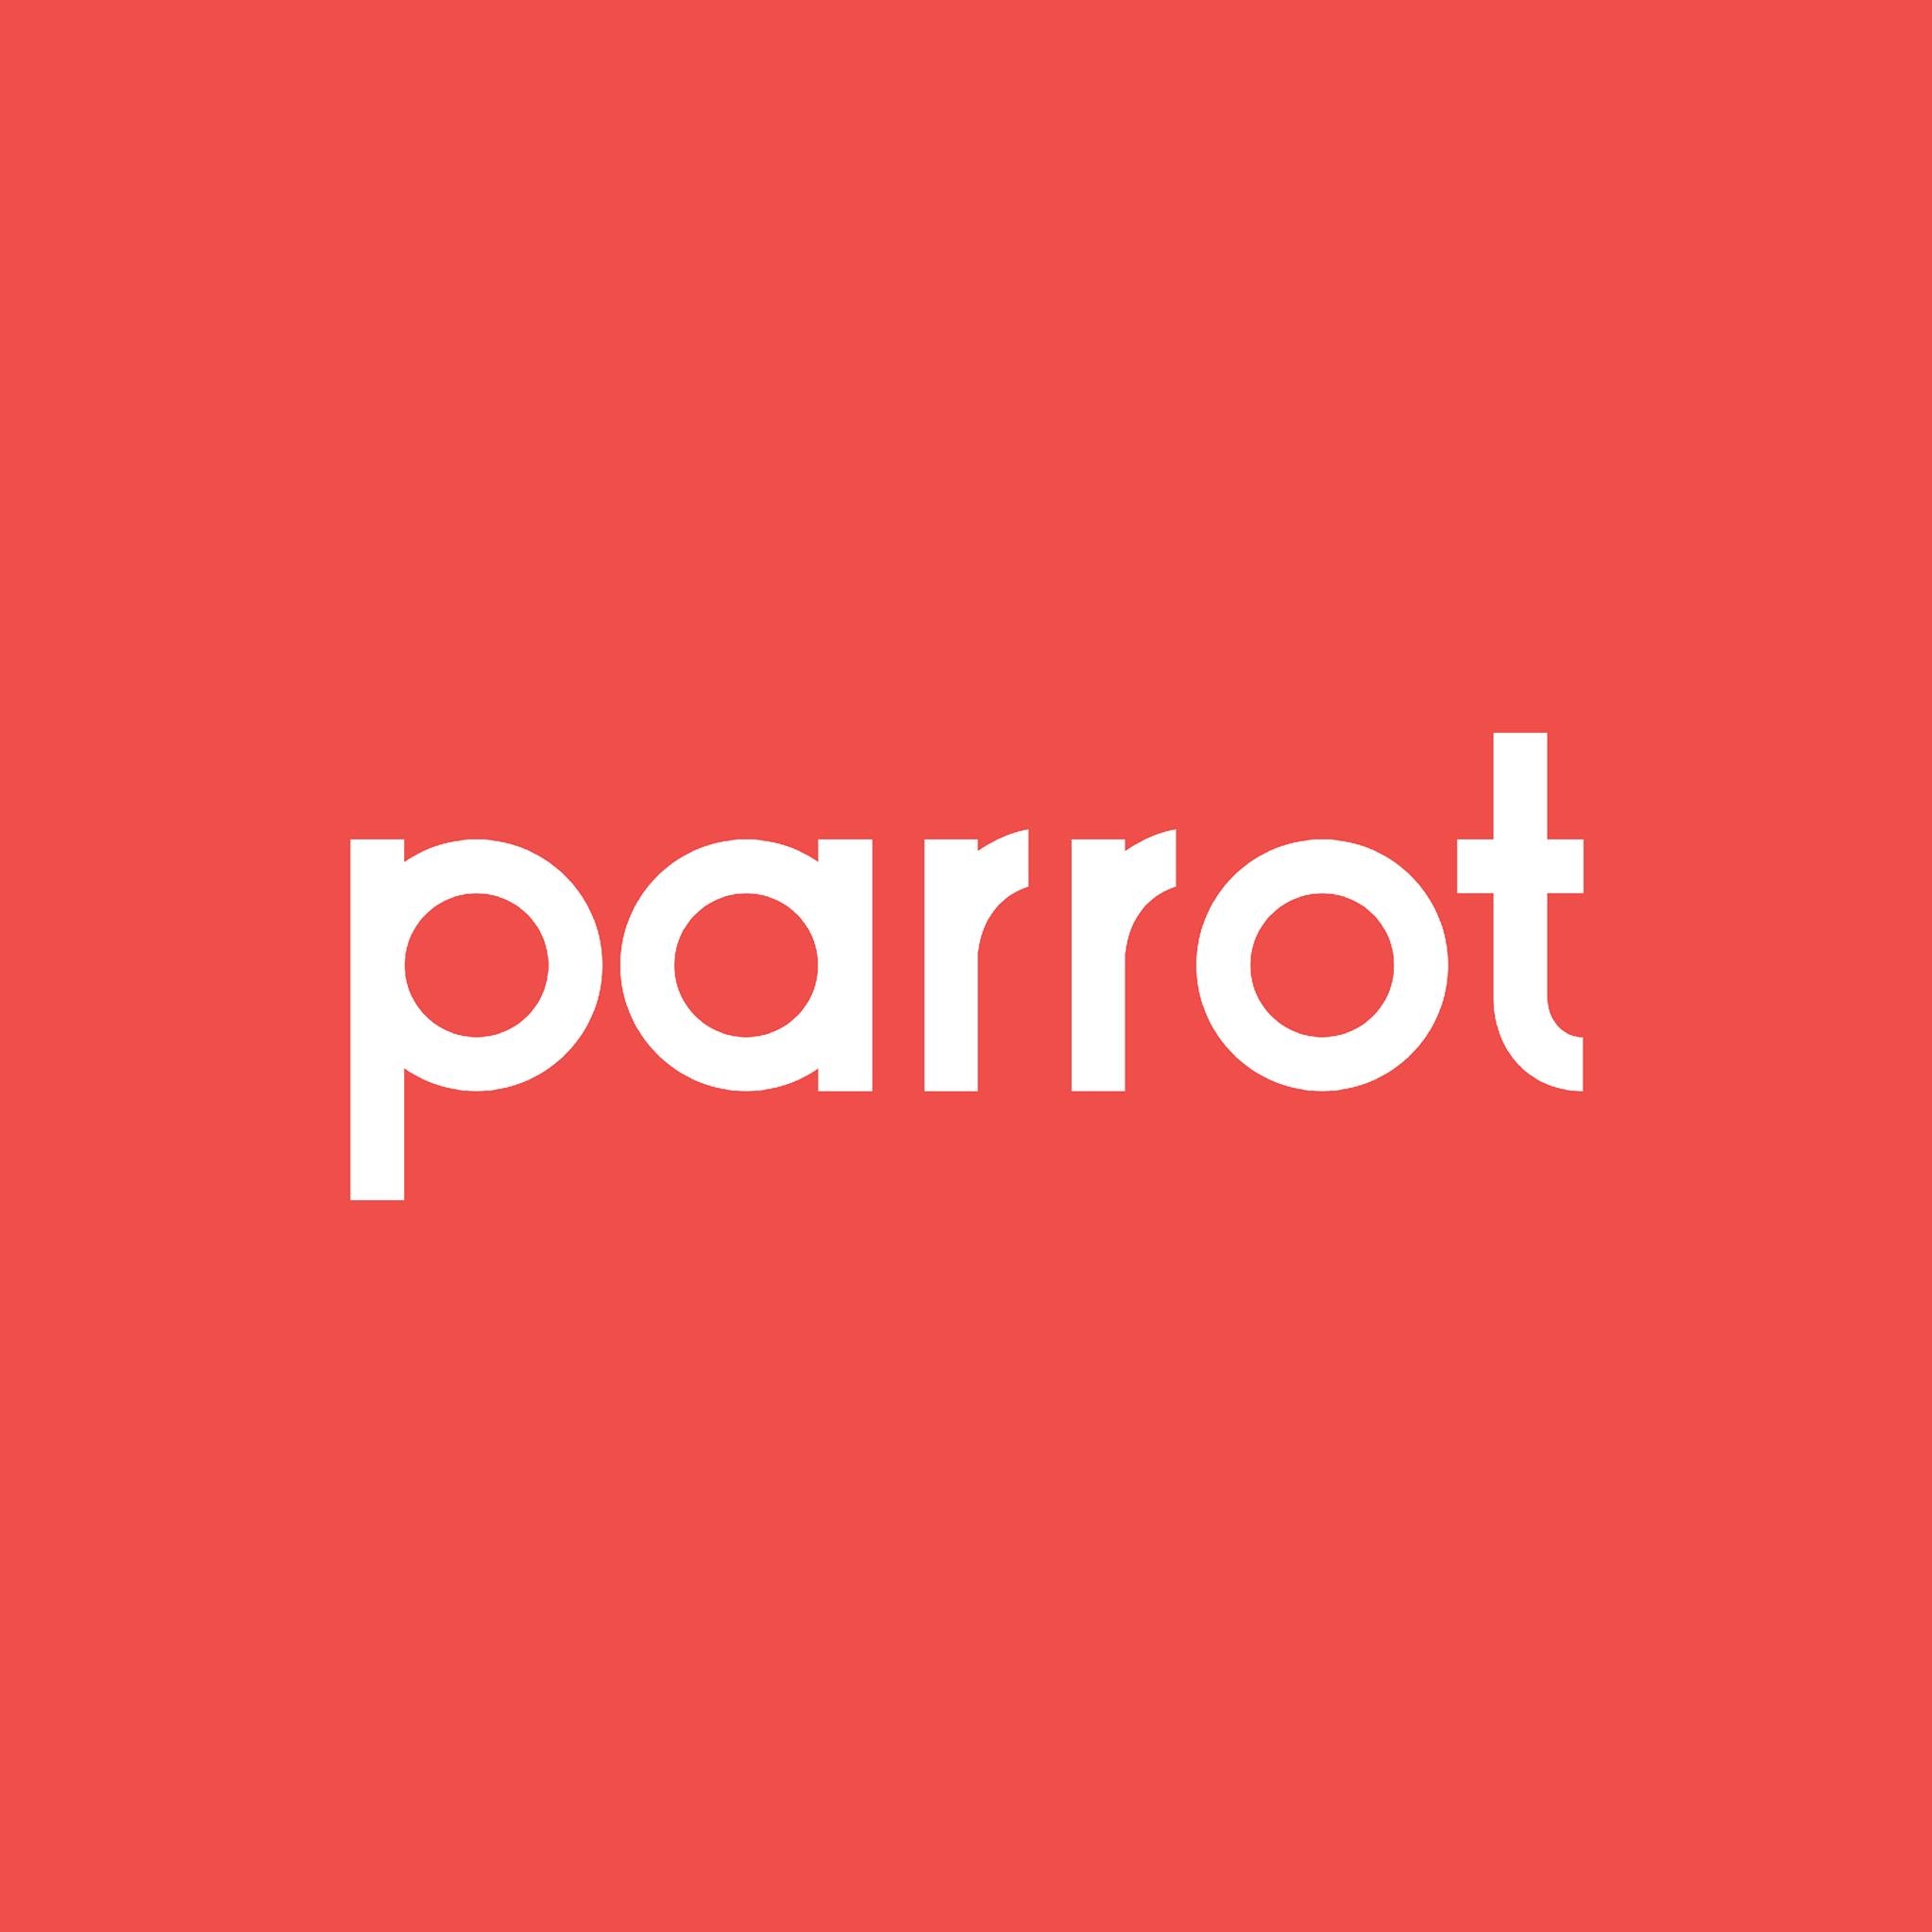 Parrot Software